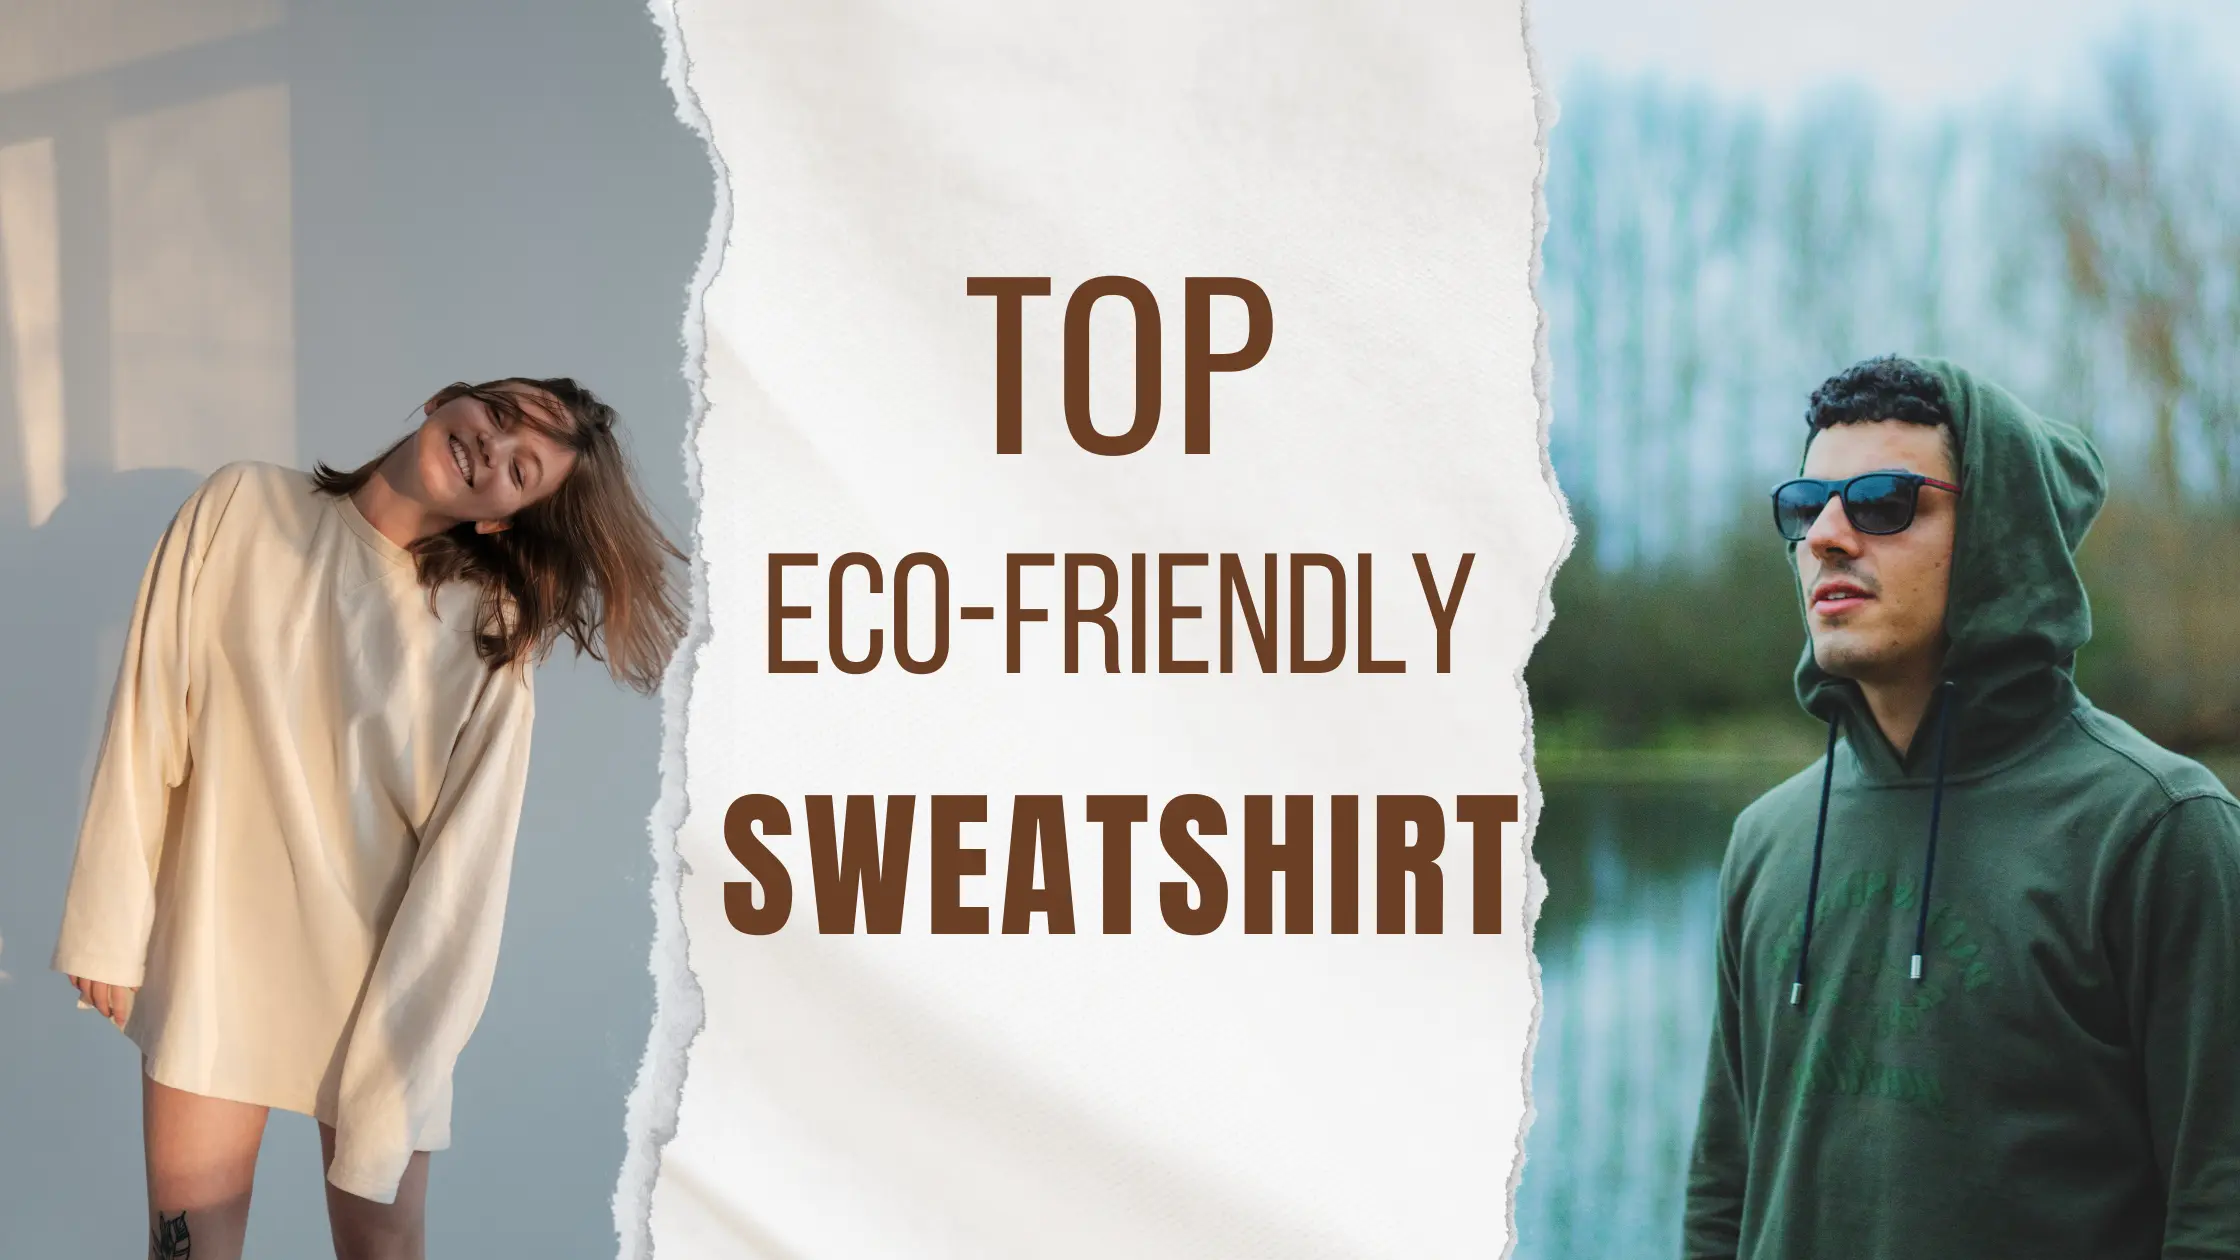 Sustainable Sweatshirts - Eco-friendly trends.